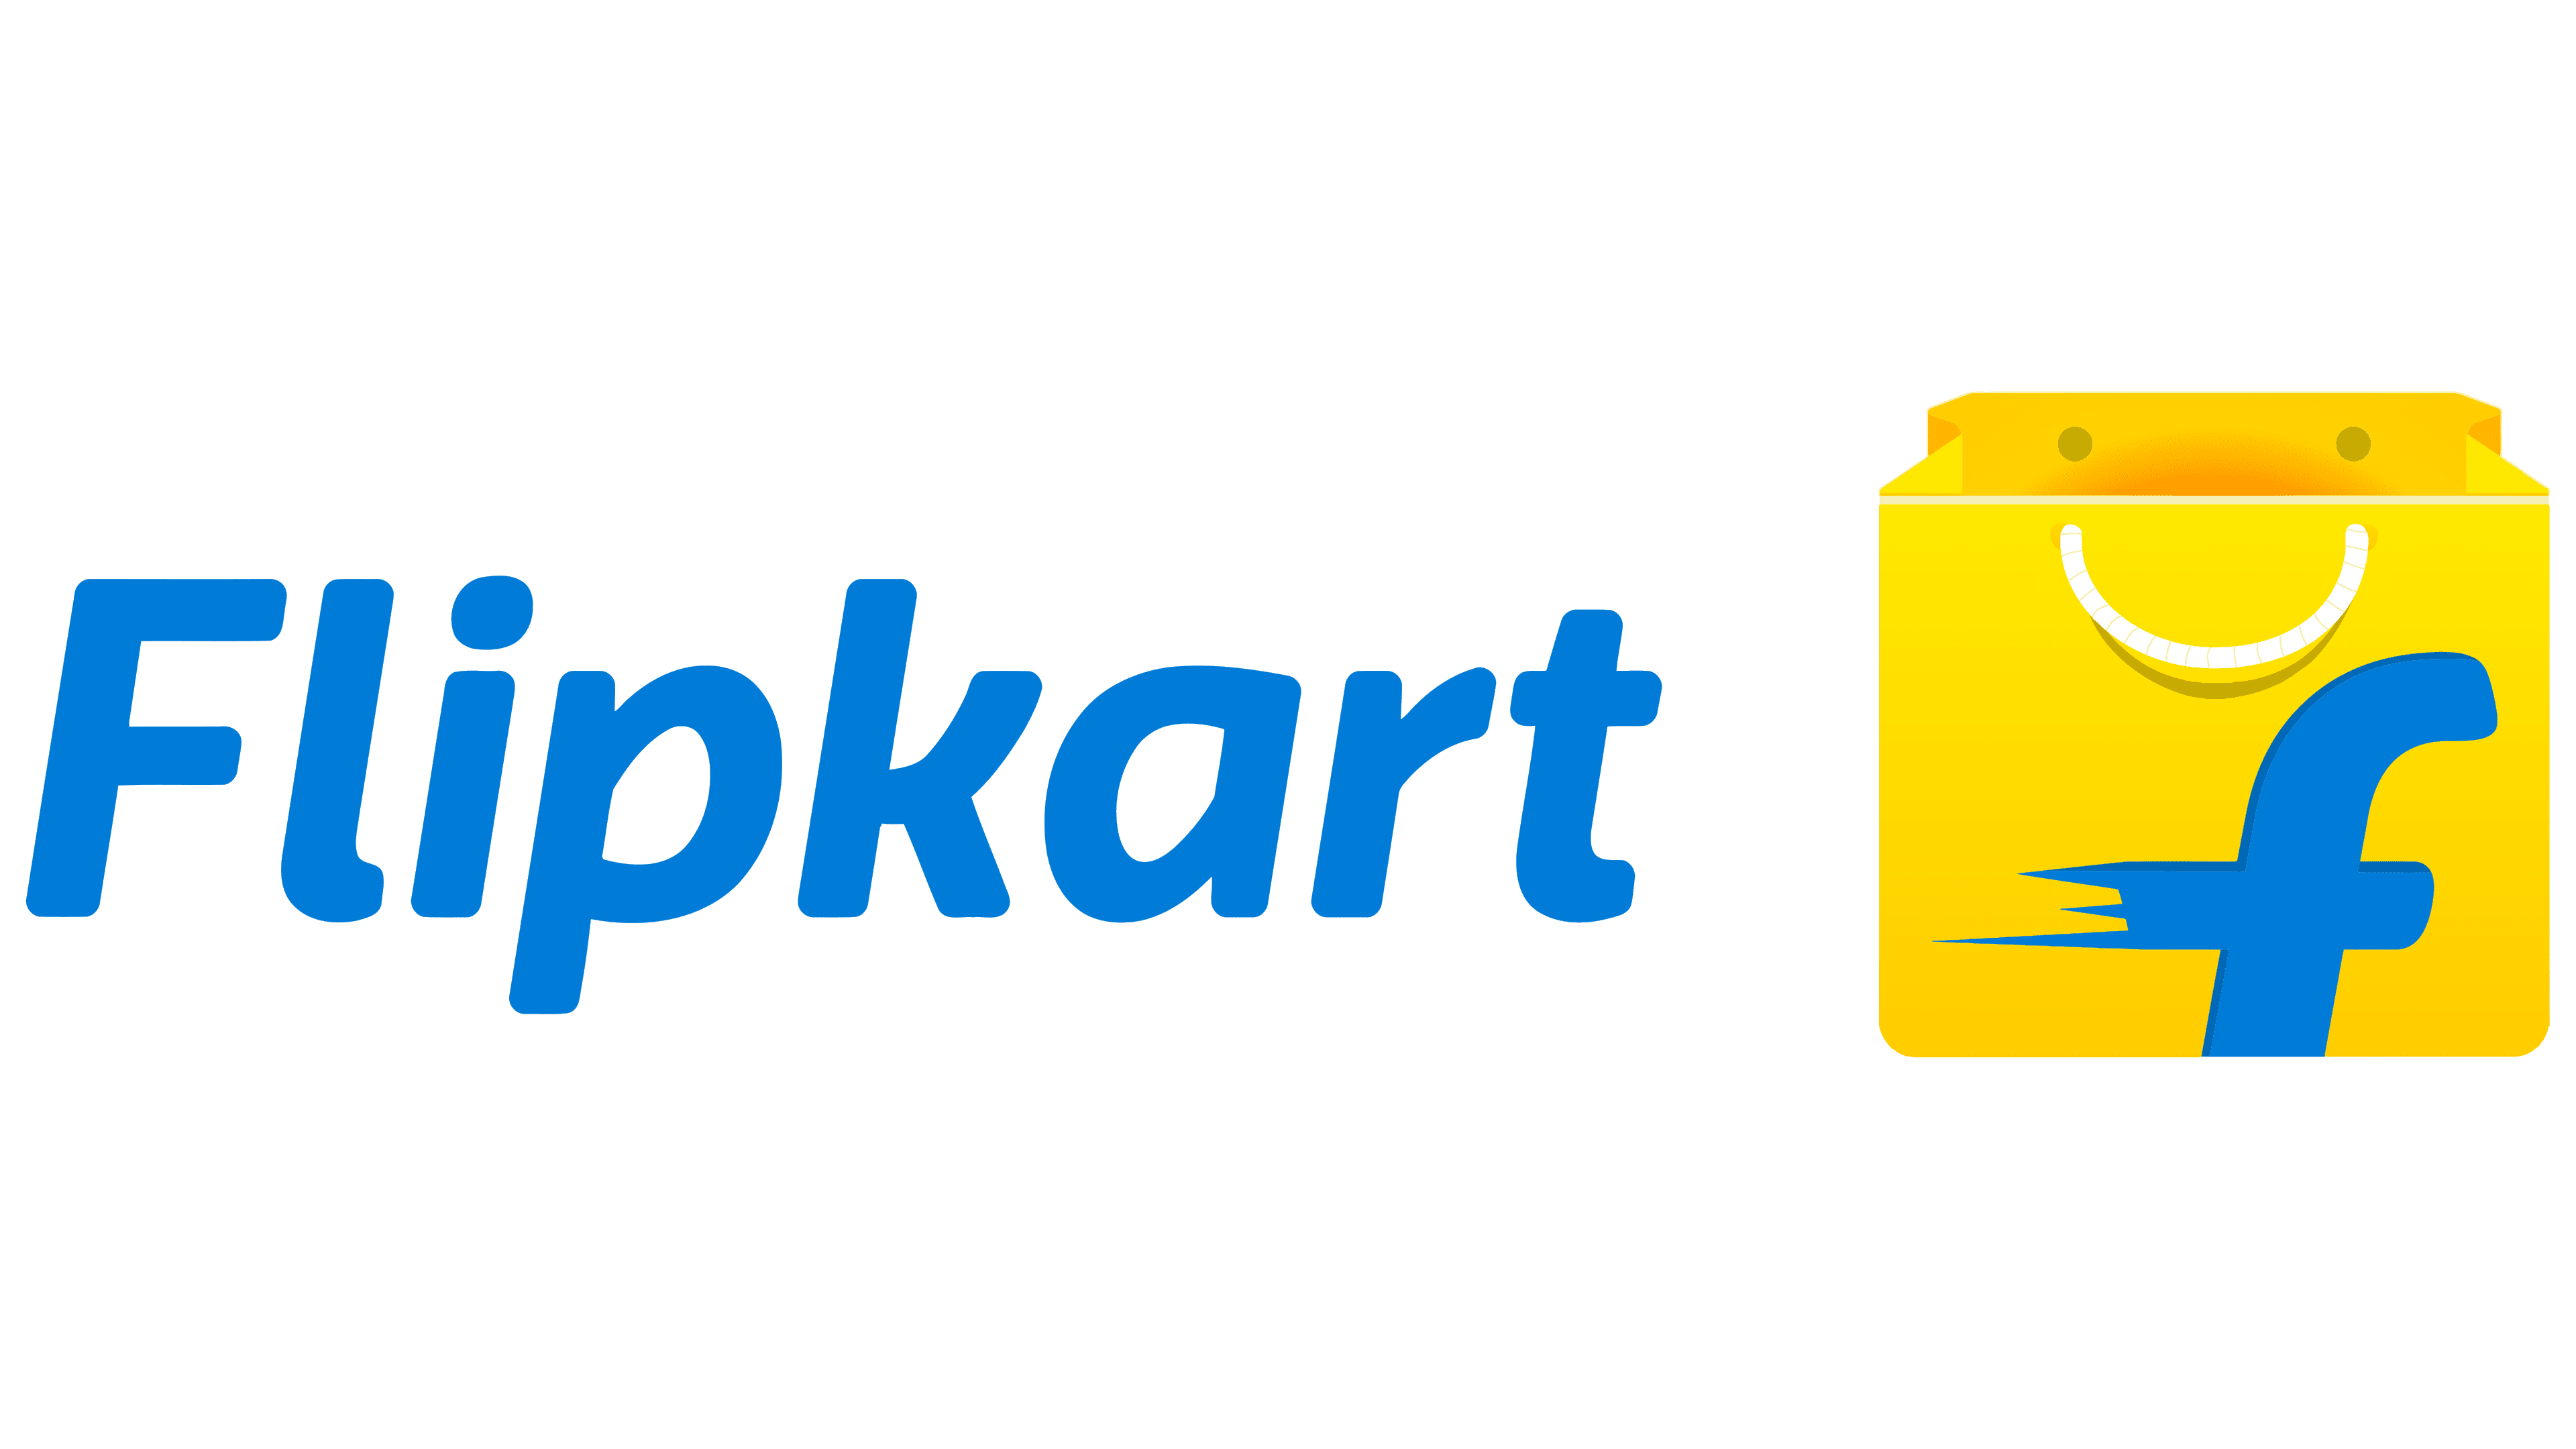 Flipkart Logo and symbol, meaning, history, PNG